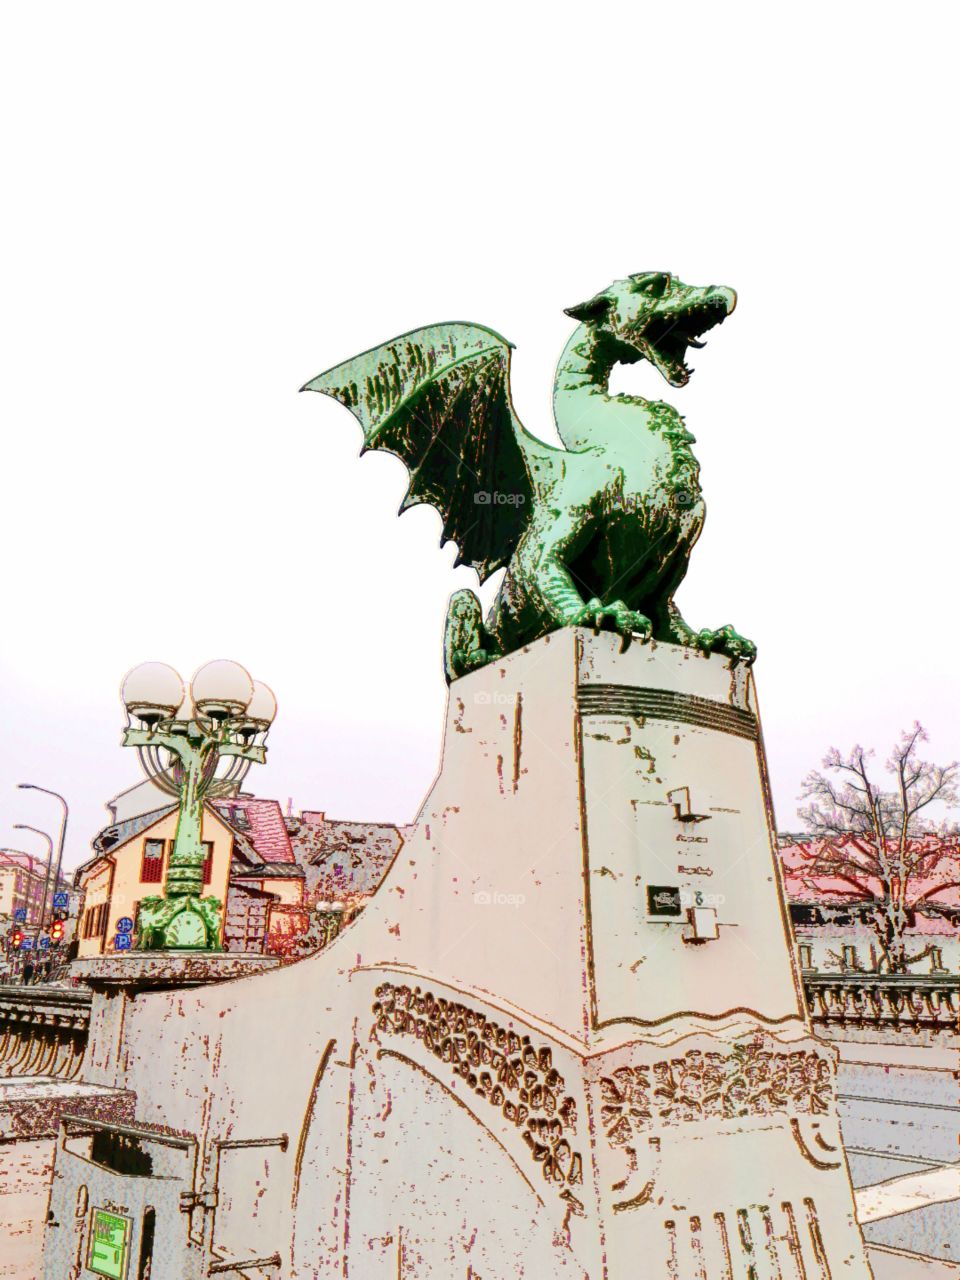 Dragon sculpture on Dragon Bridge in "City of the Dragons" Oldtown Ljubljana, Slovenia